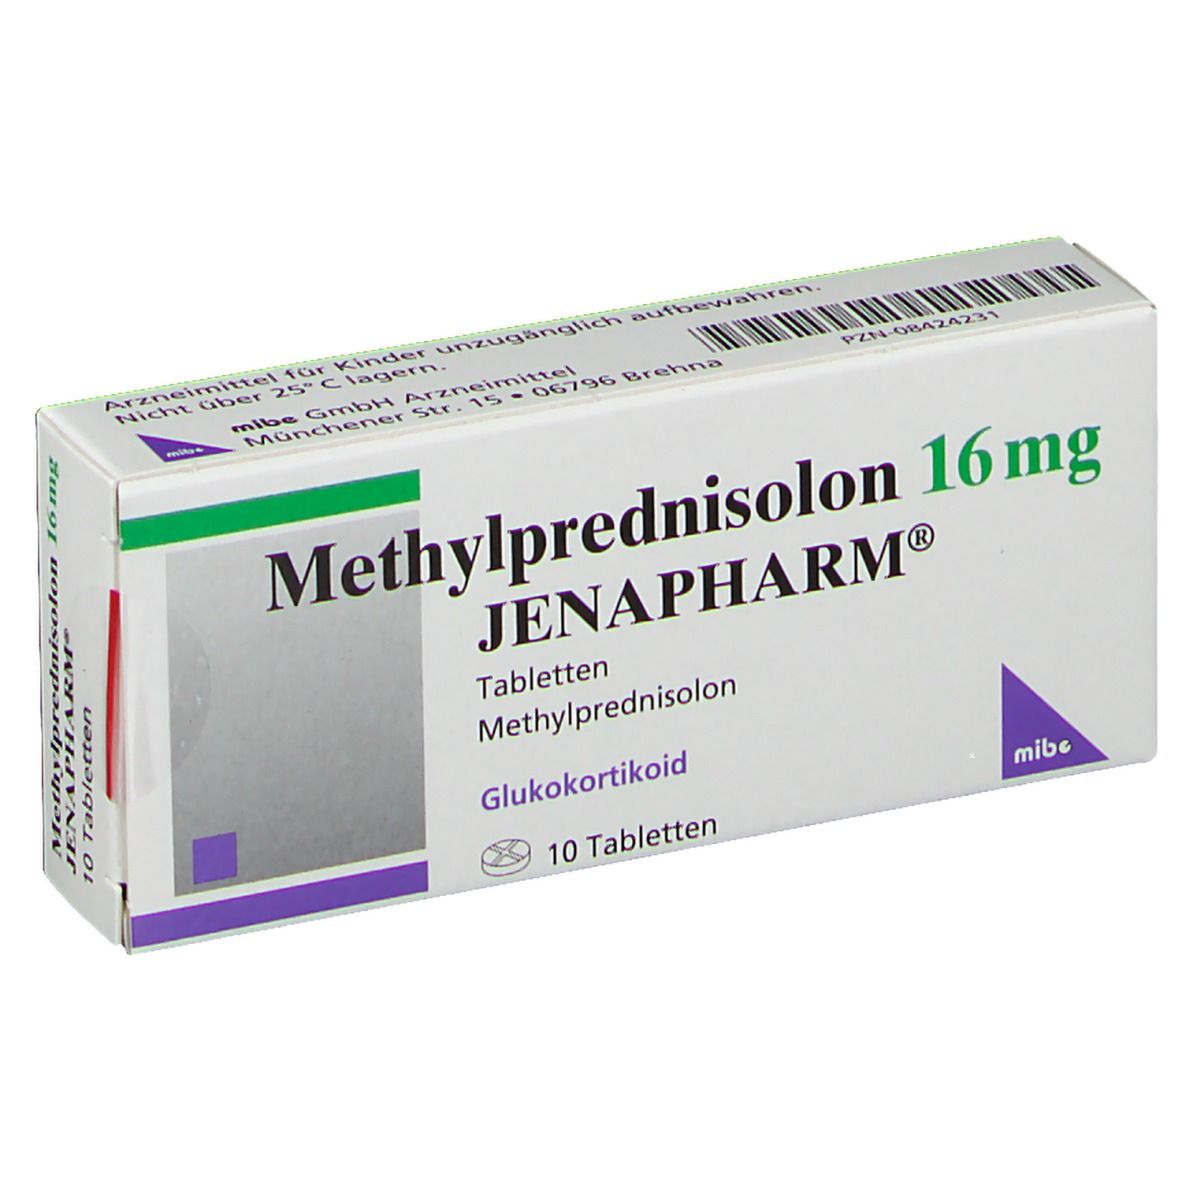 Methylprednisolon 16 mg JENAPHARM®